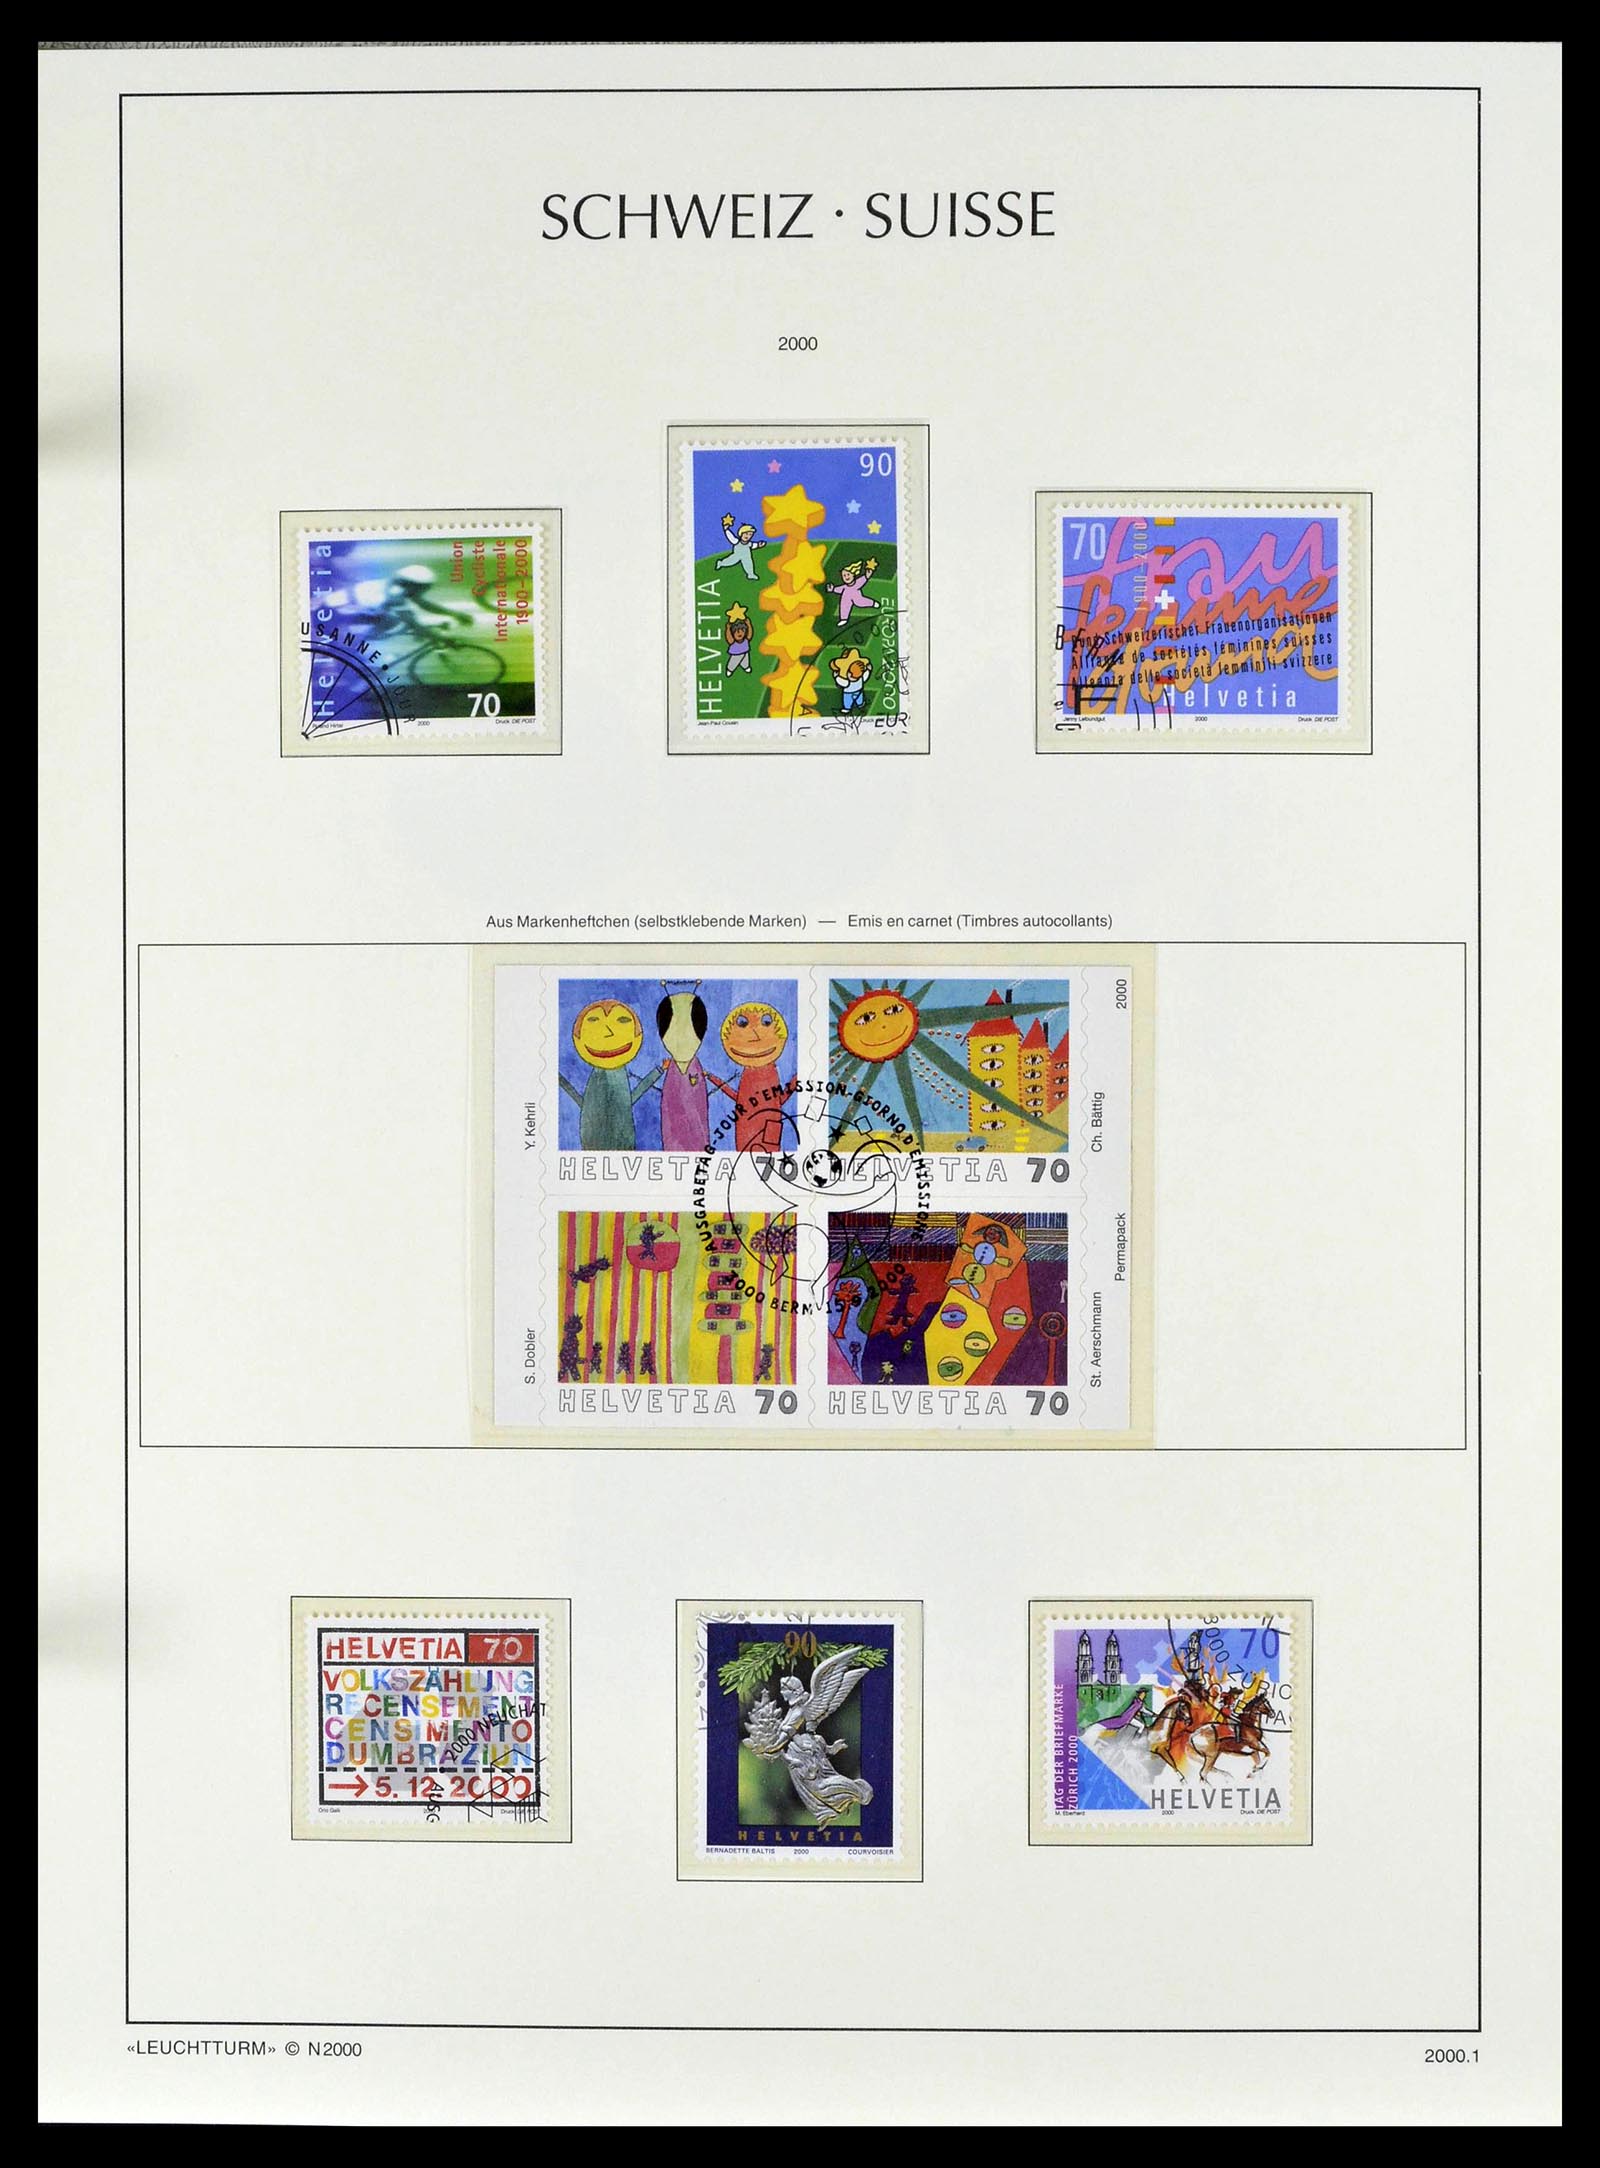 39094 0121 - Stamp collection 39094 Switzerland 1850-2005.